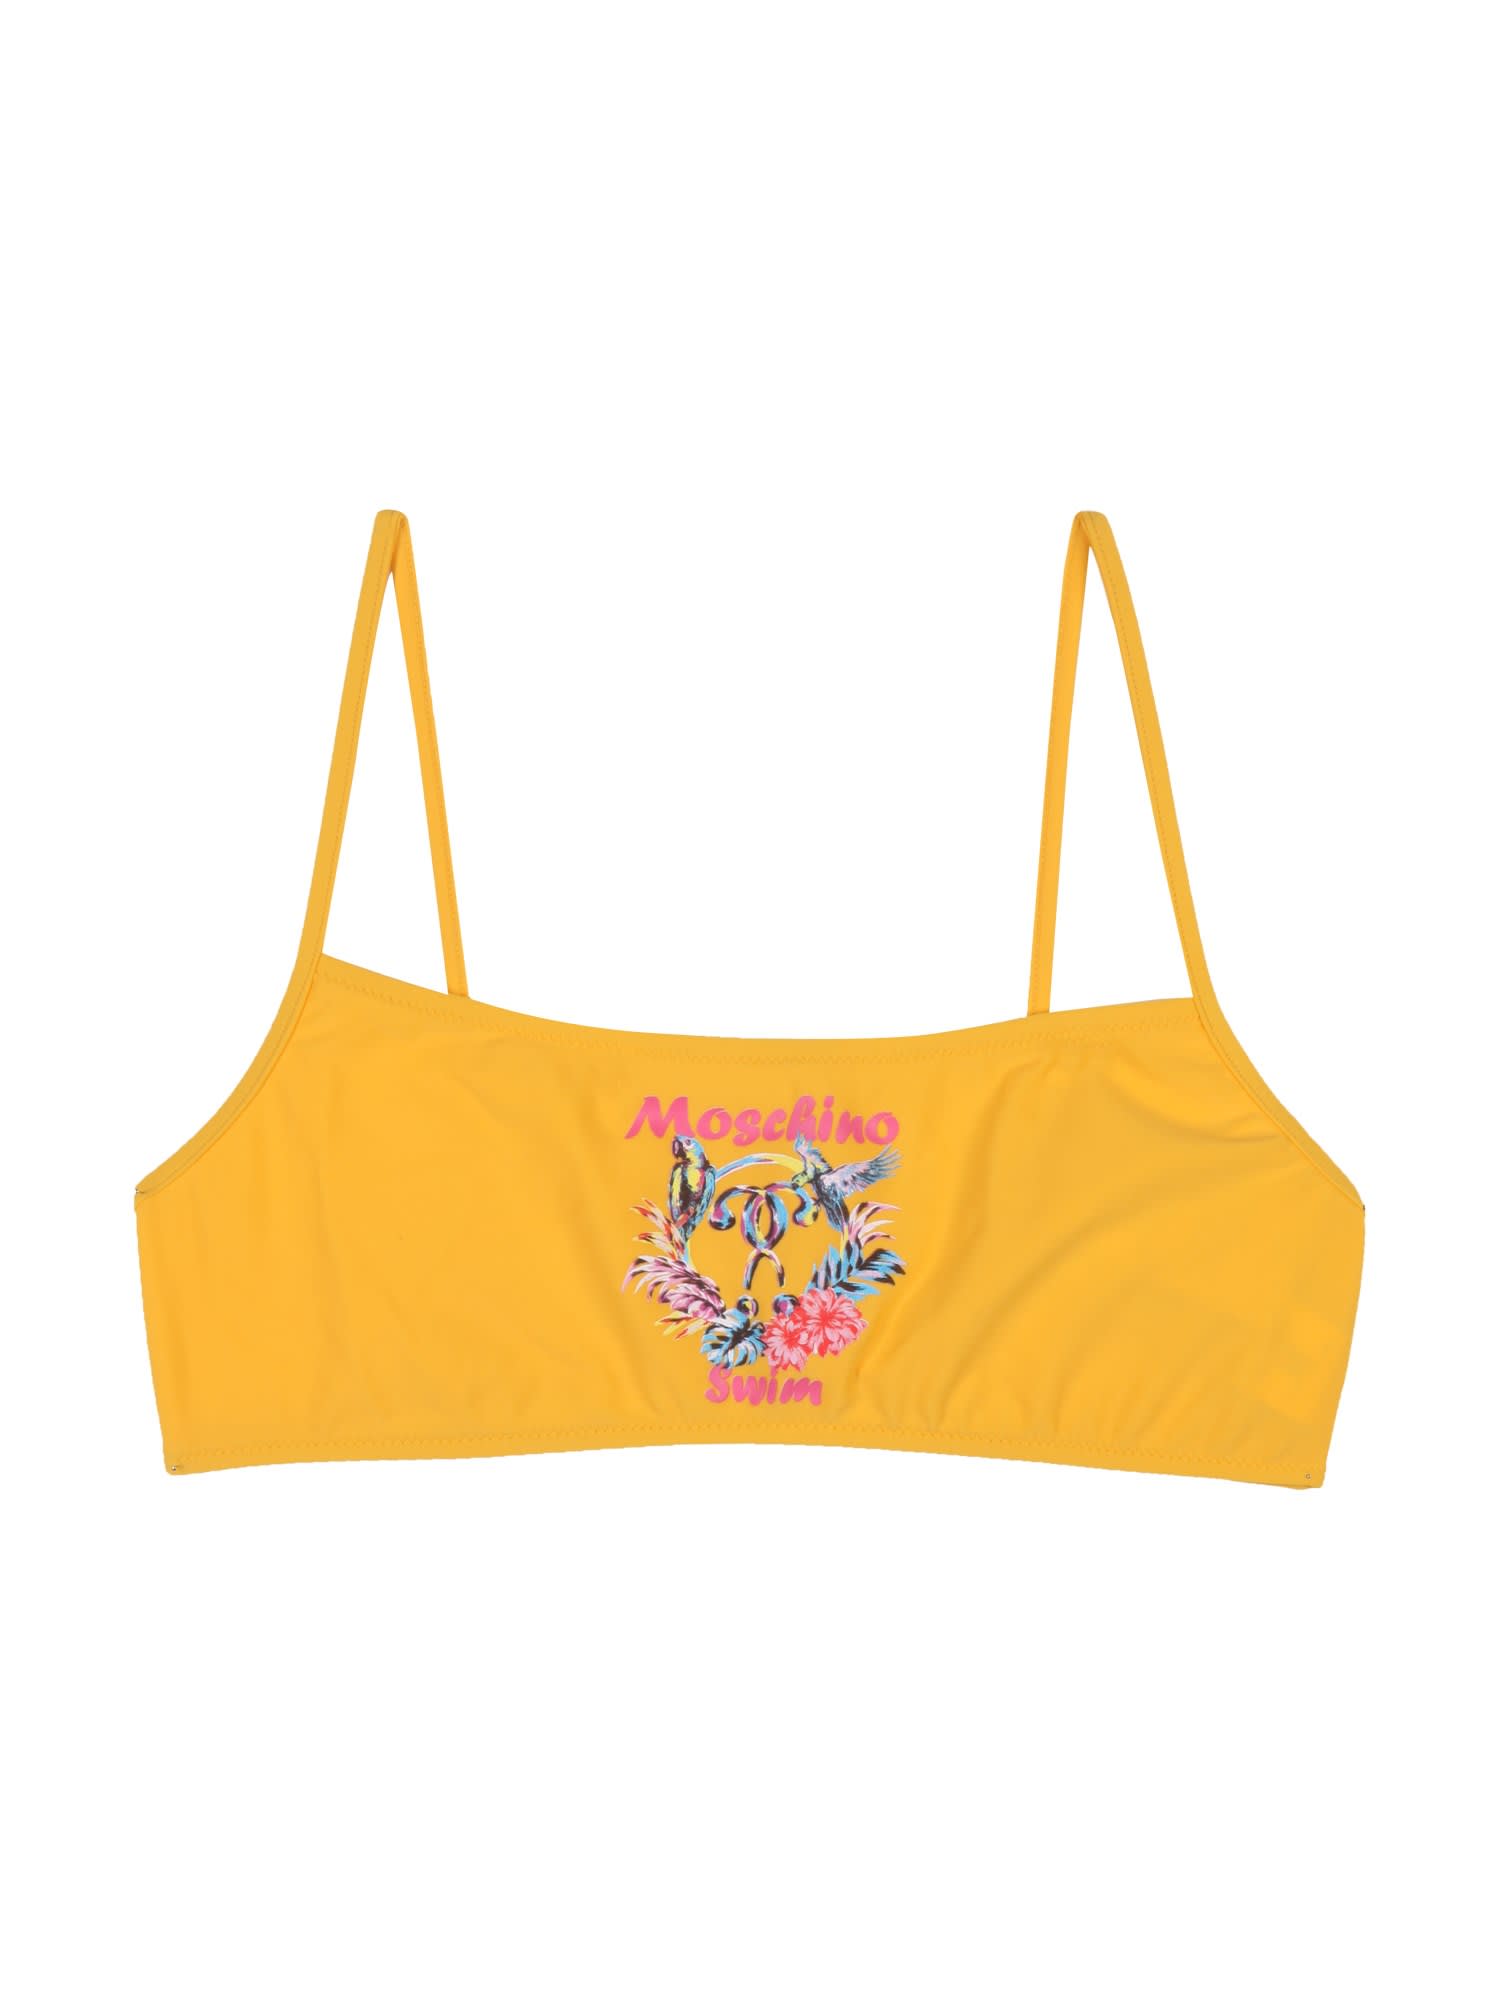 Moschino Parrot Bikini Top